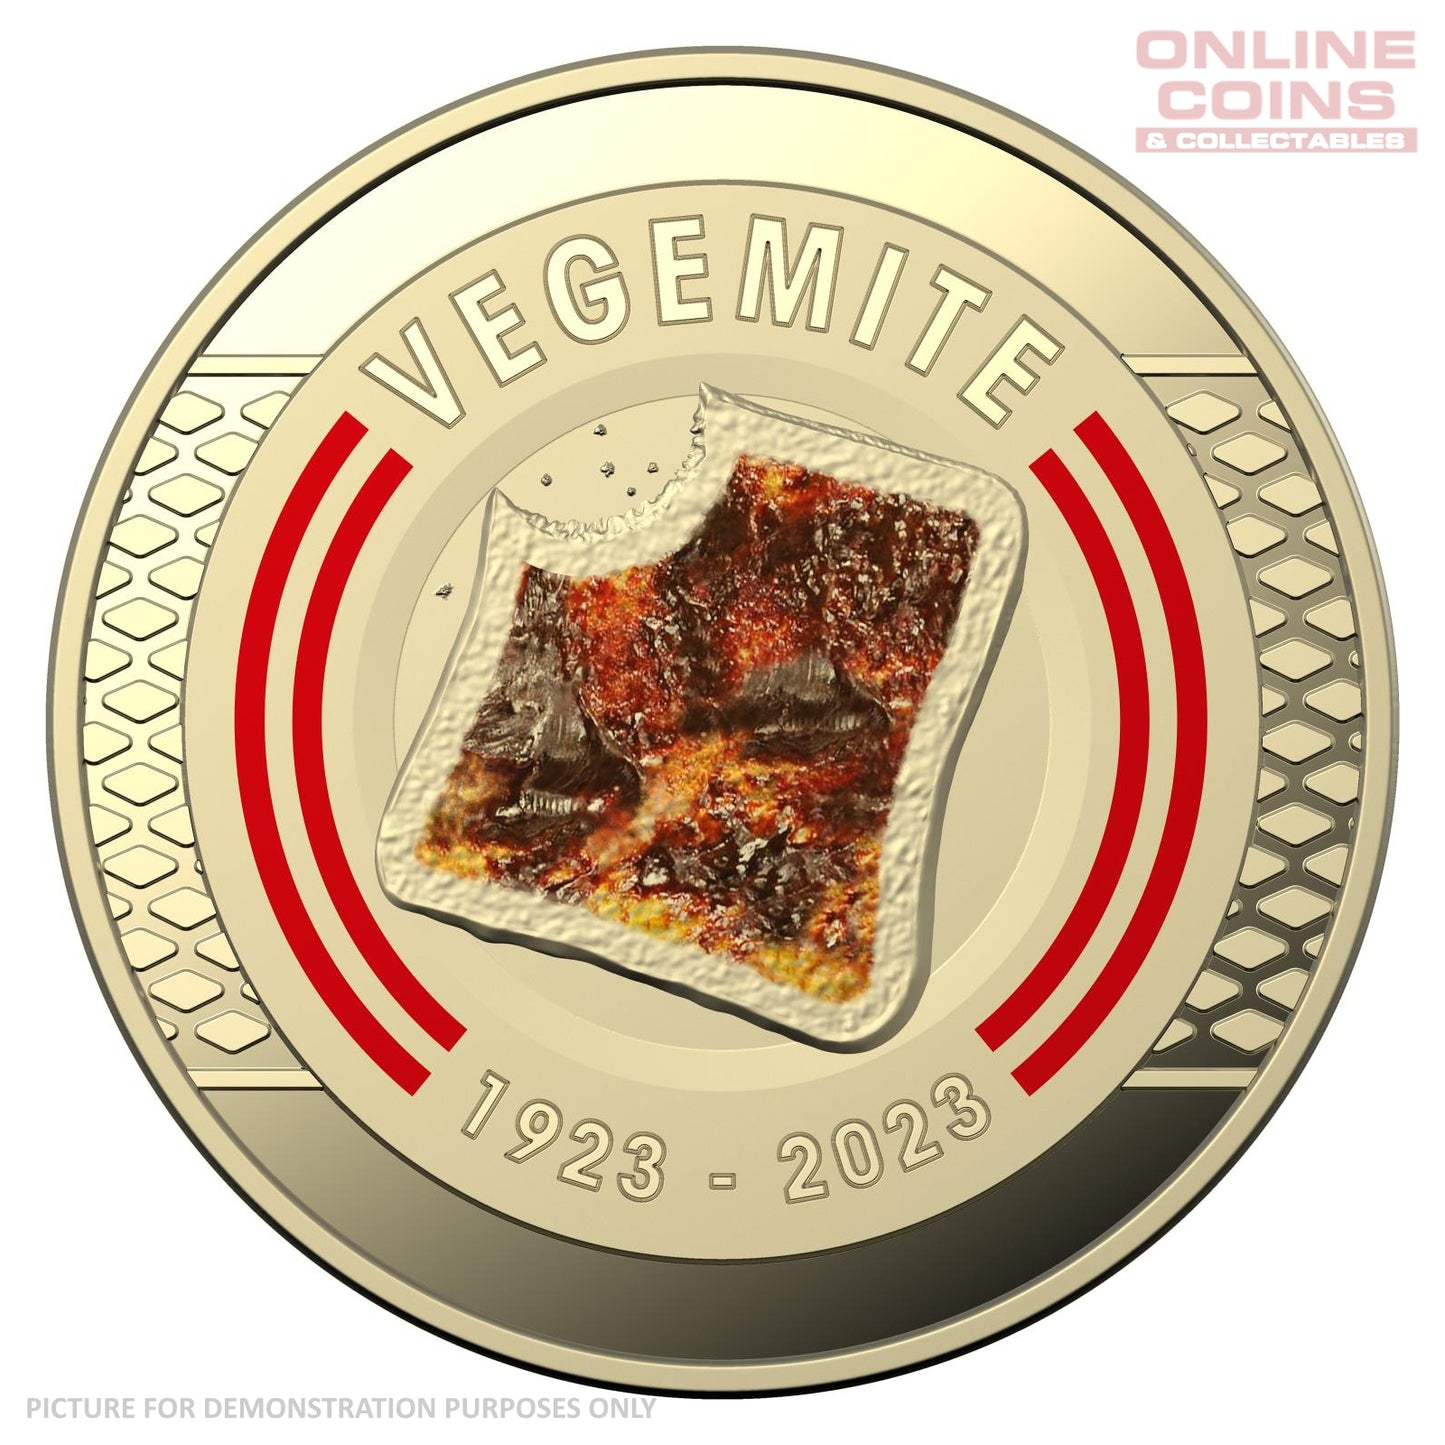 2023 RAM Proof Six Coin Year Set - Centenary of Vegemite